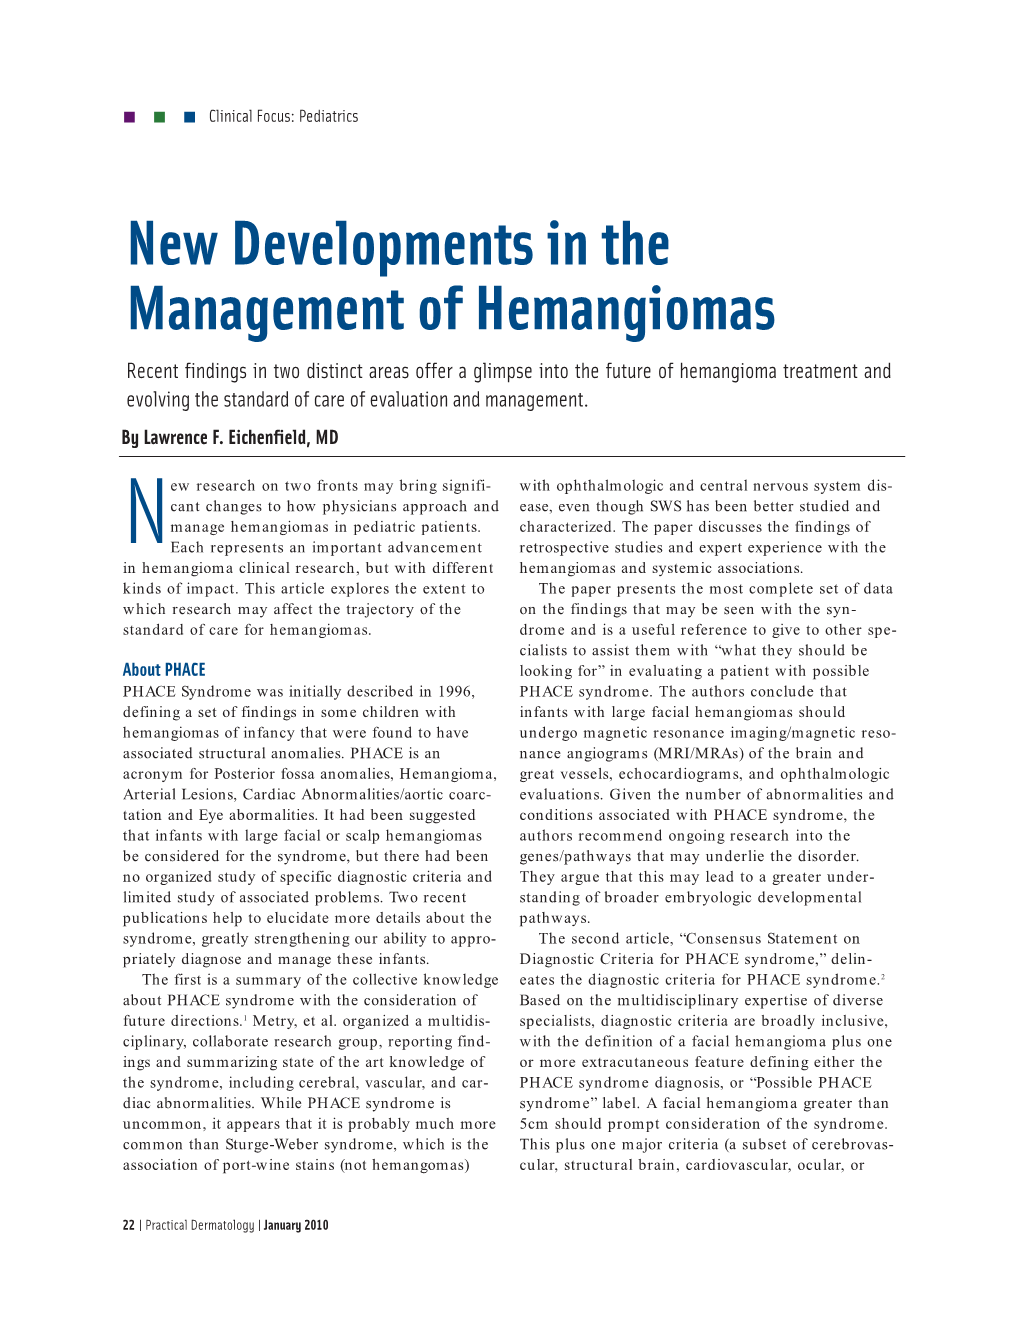 New Developments in the Management of Hemangiomas